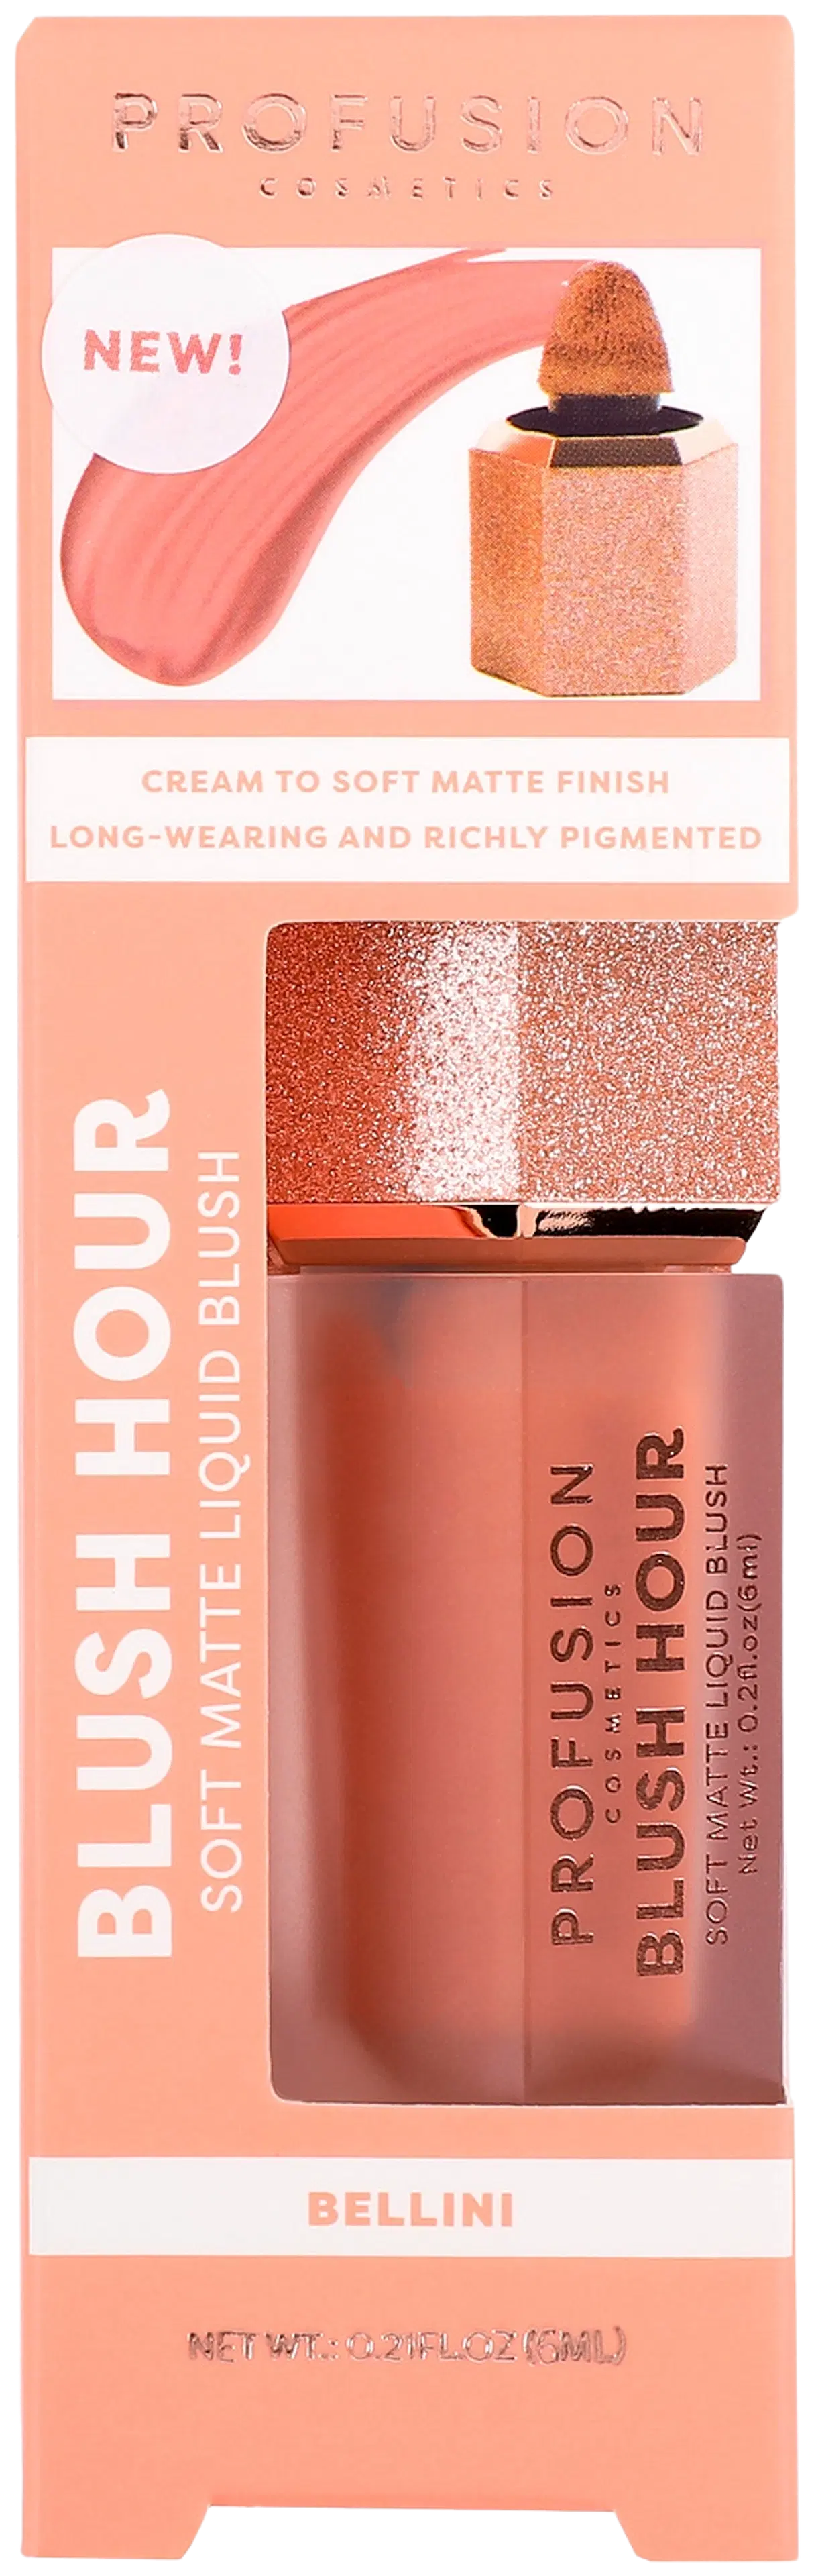 Profusion Cosmetics Blush Hour Soft Matte Liquid Blush nestemäinen poskipuna 6 ml